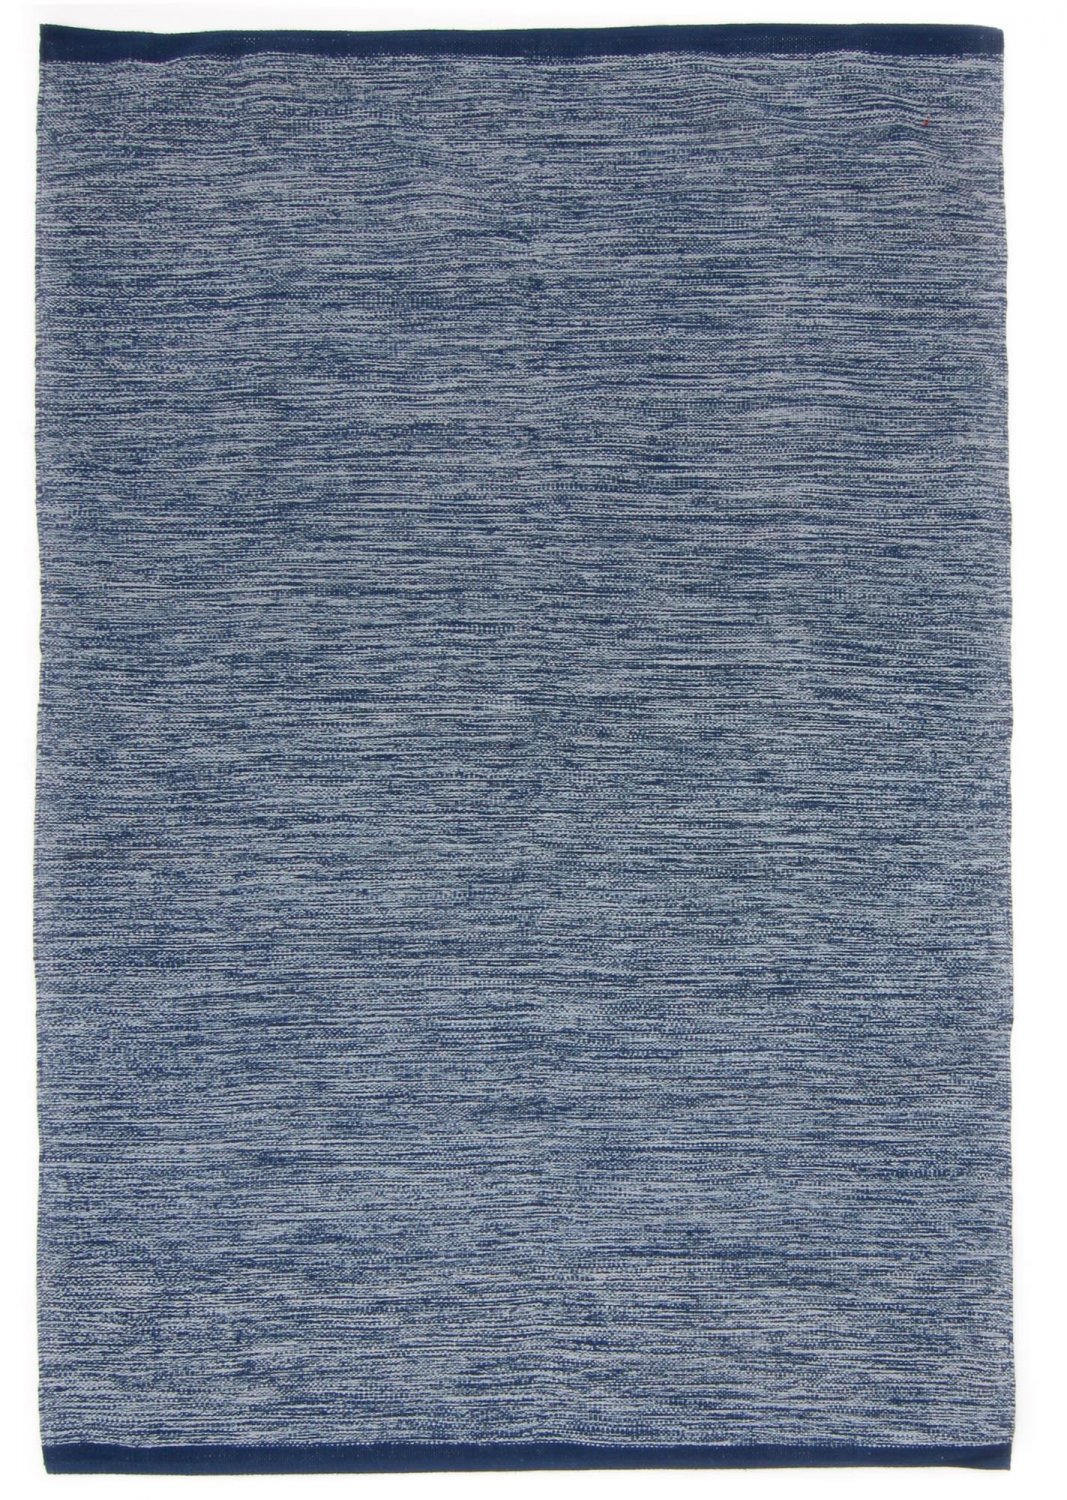 Voddenkleed - Slite (blauw)